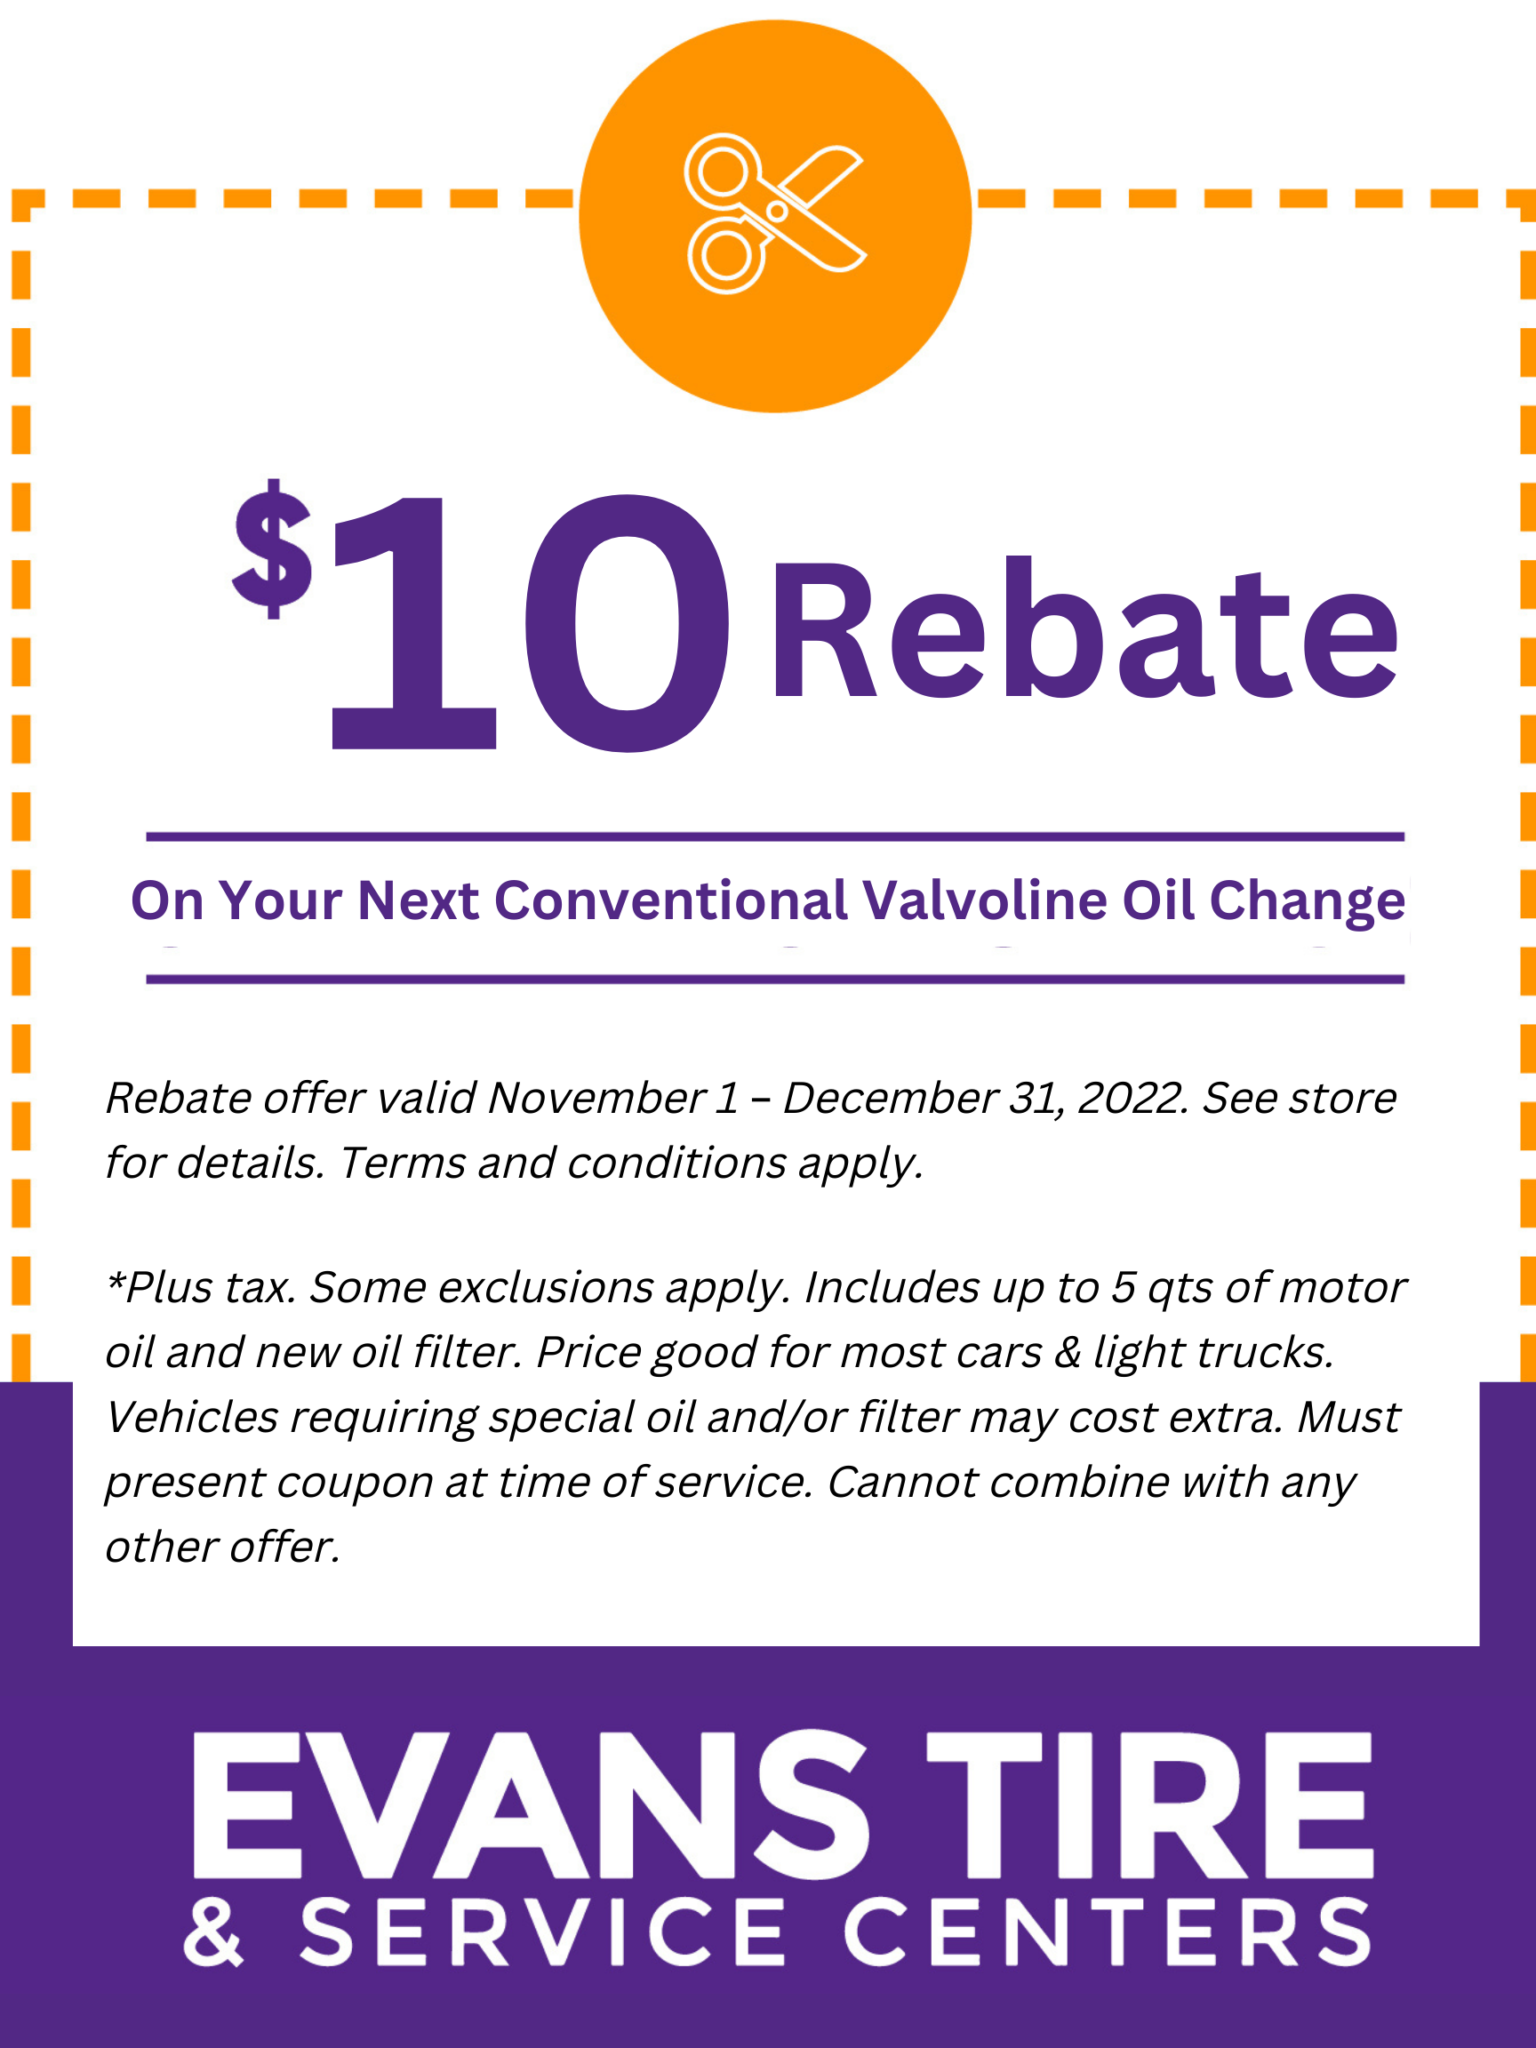 valvoline-conventional-oil-change-rebate-evans-tire-service-centers